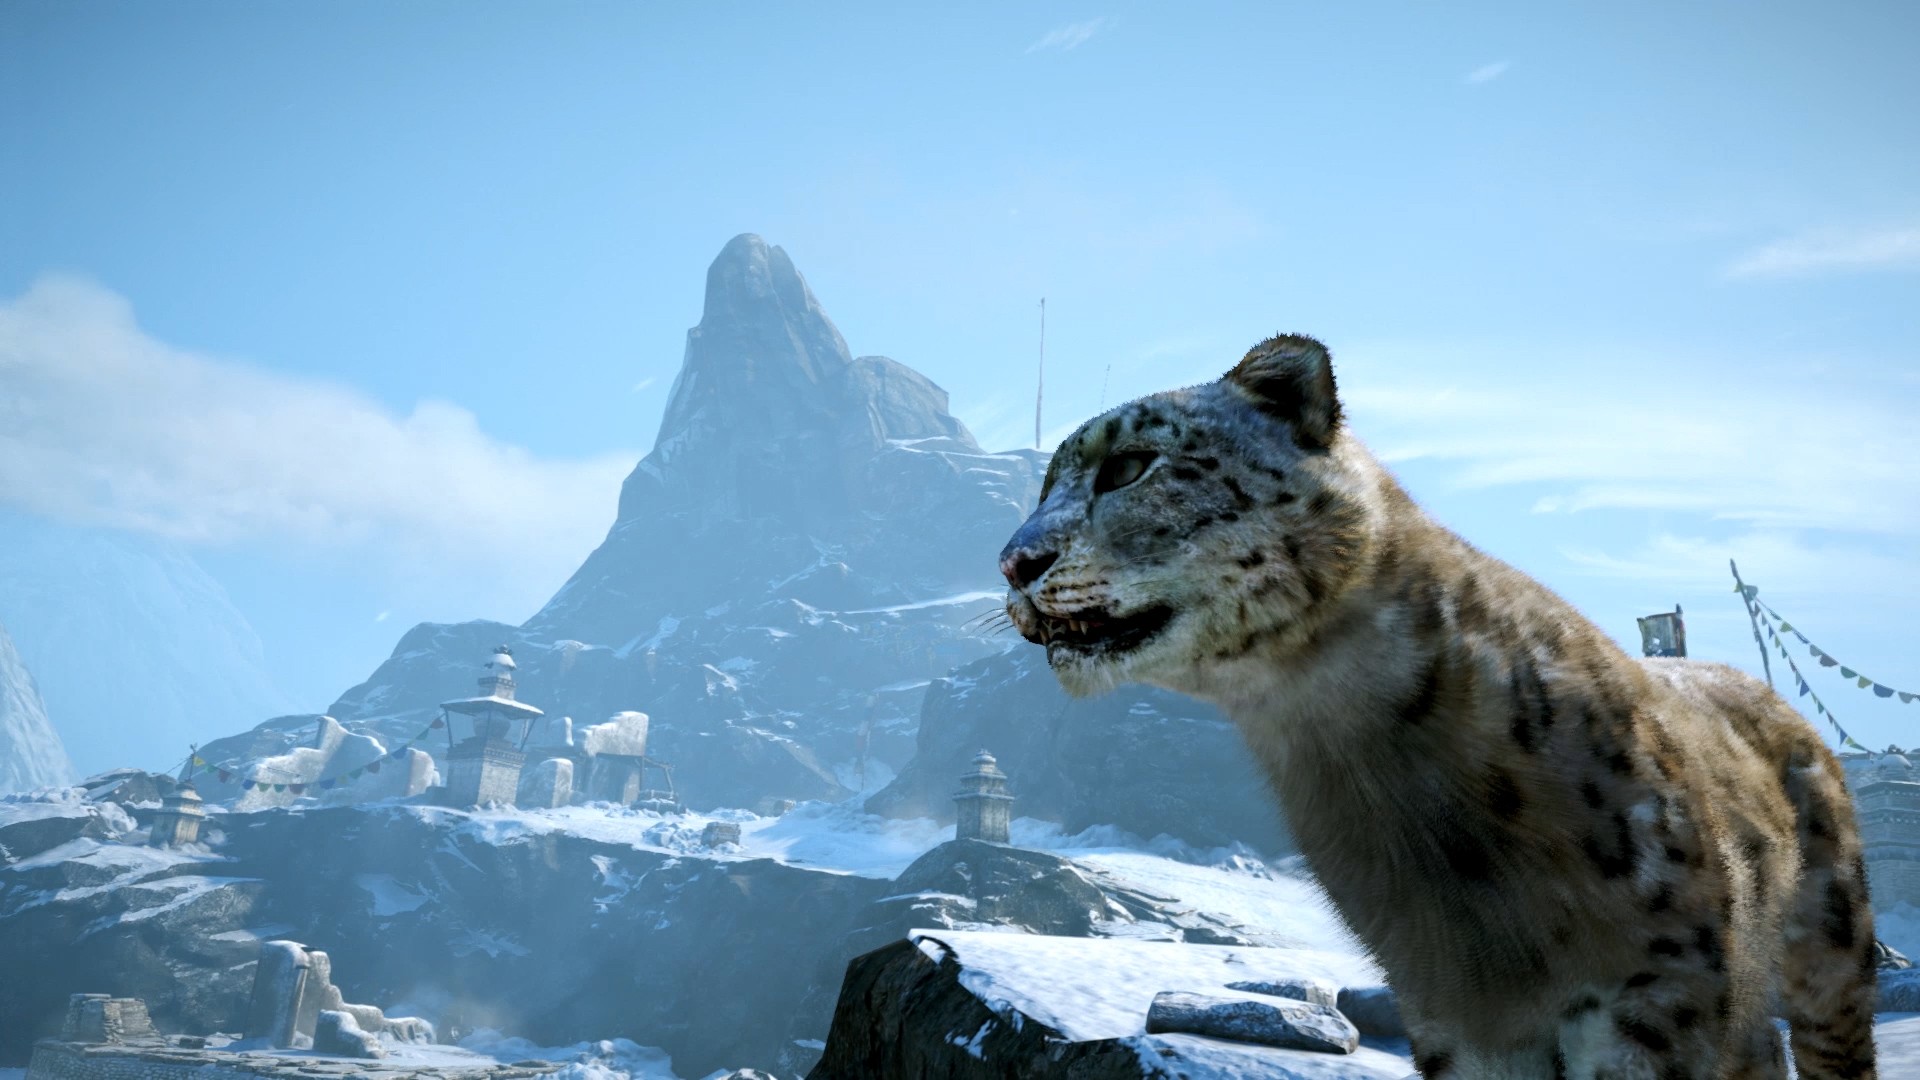 General 1920x1080 Far Cry 4 video games mountains animals mammals big cats screen shot Ubisoft video game landscape